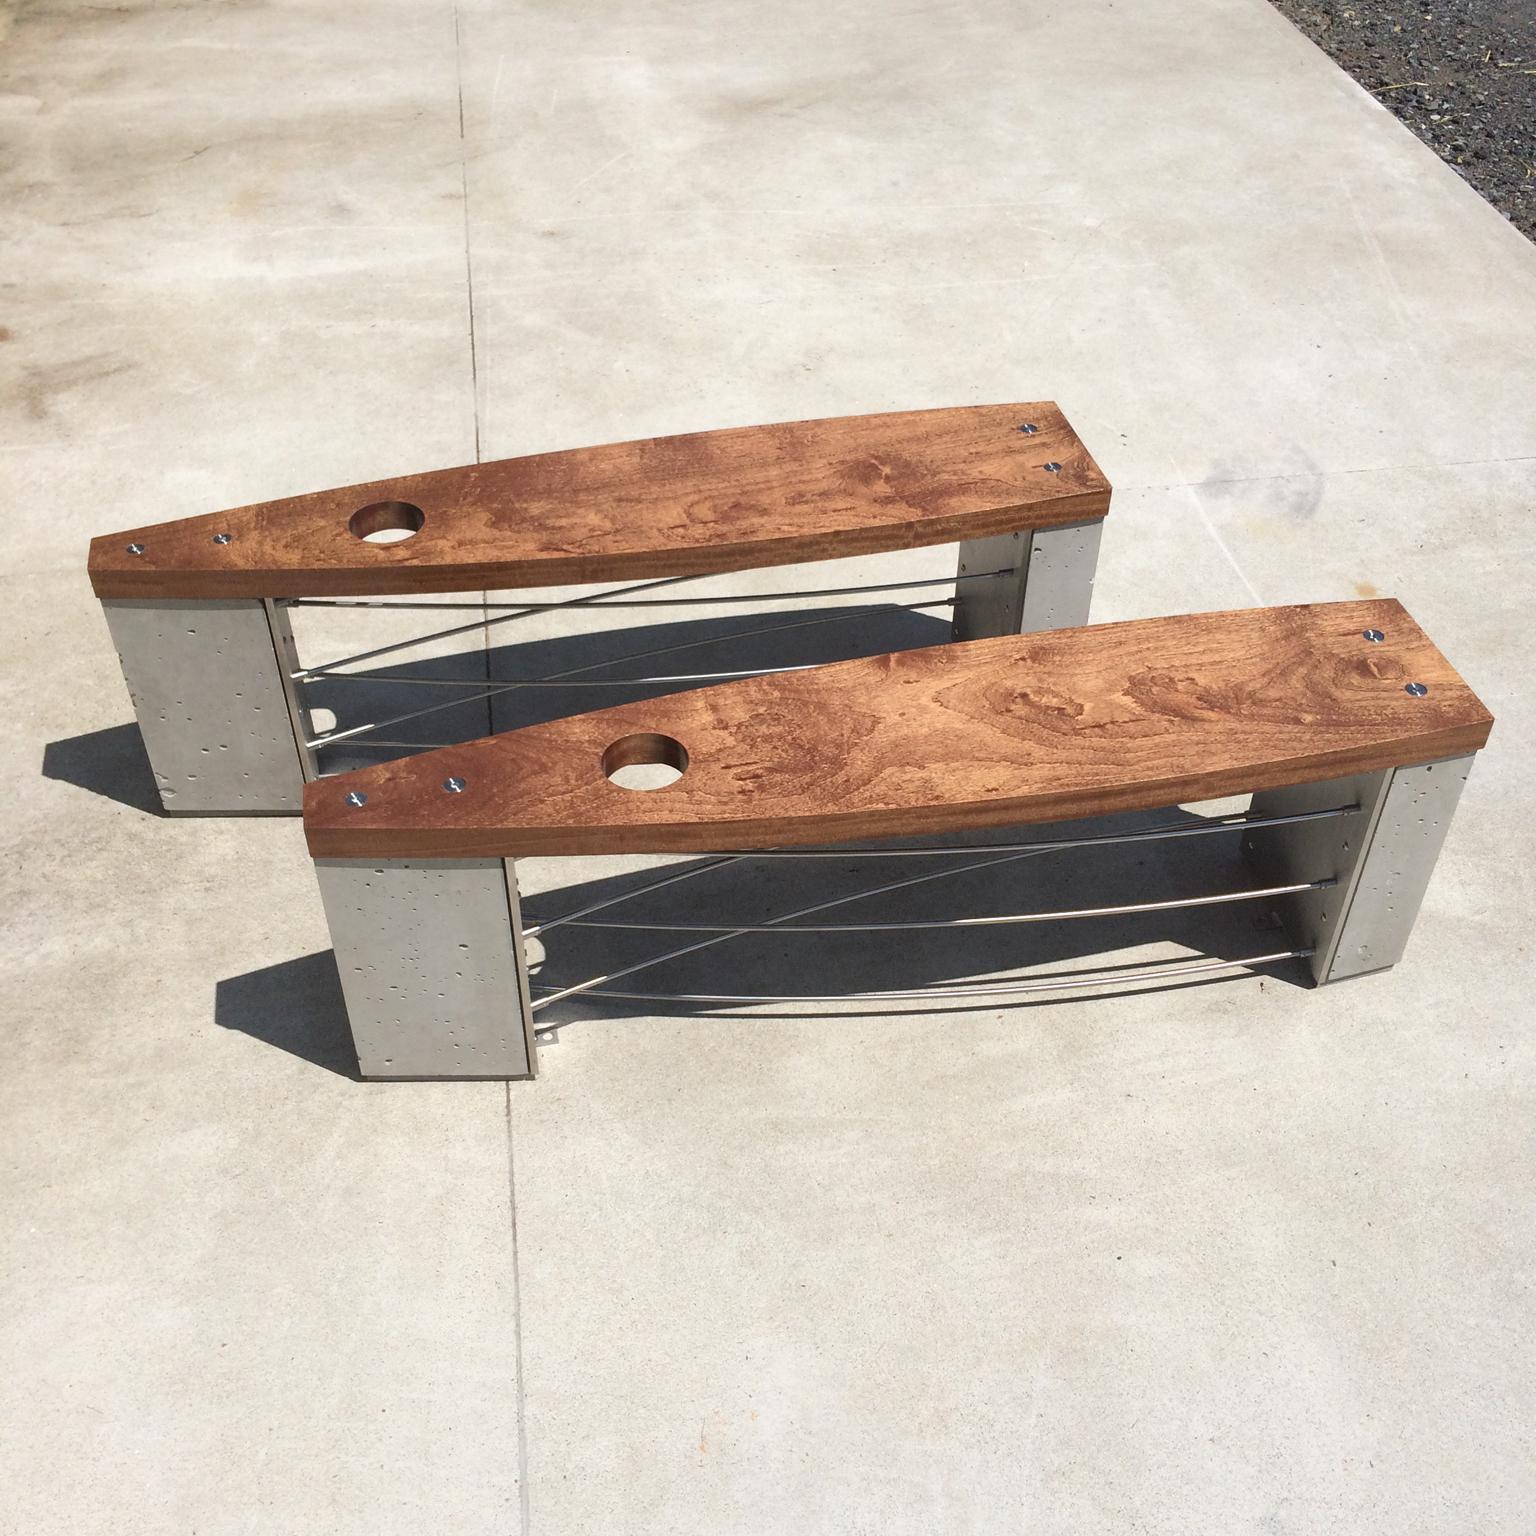 exterior wood bench